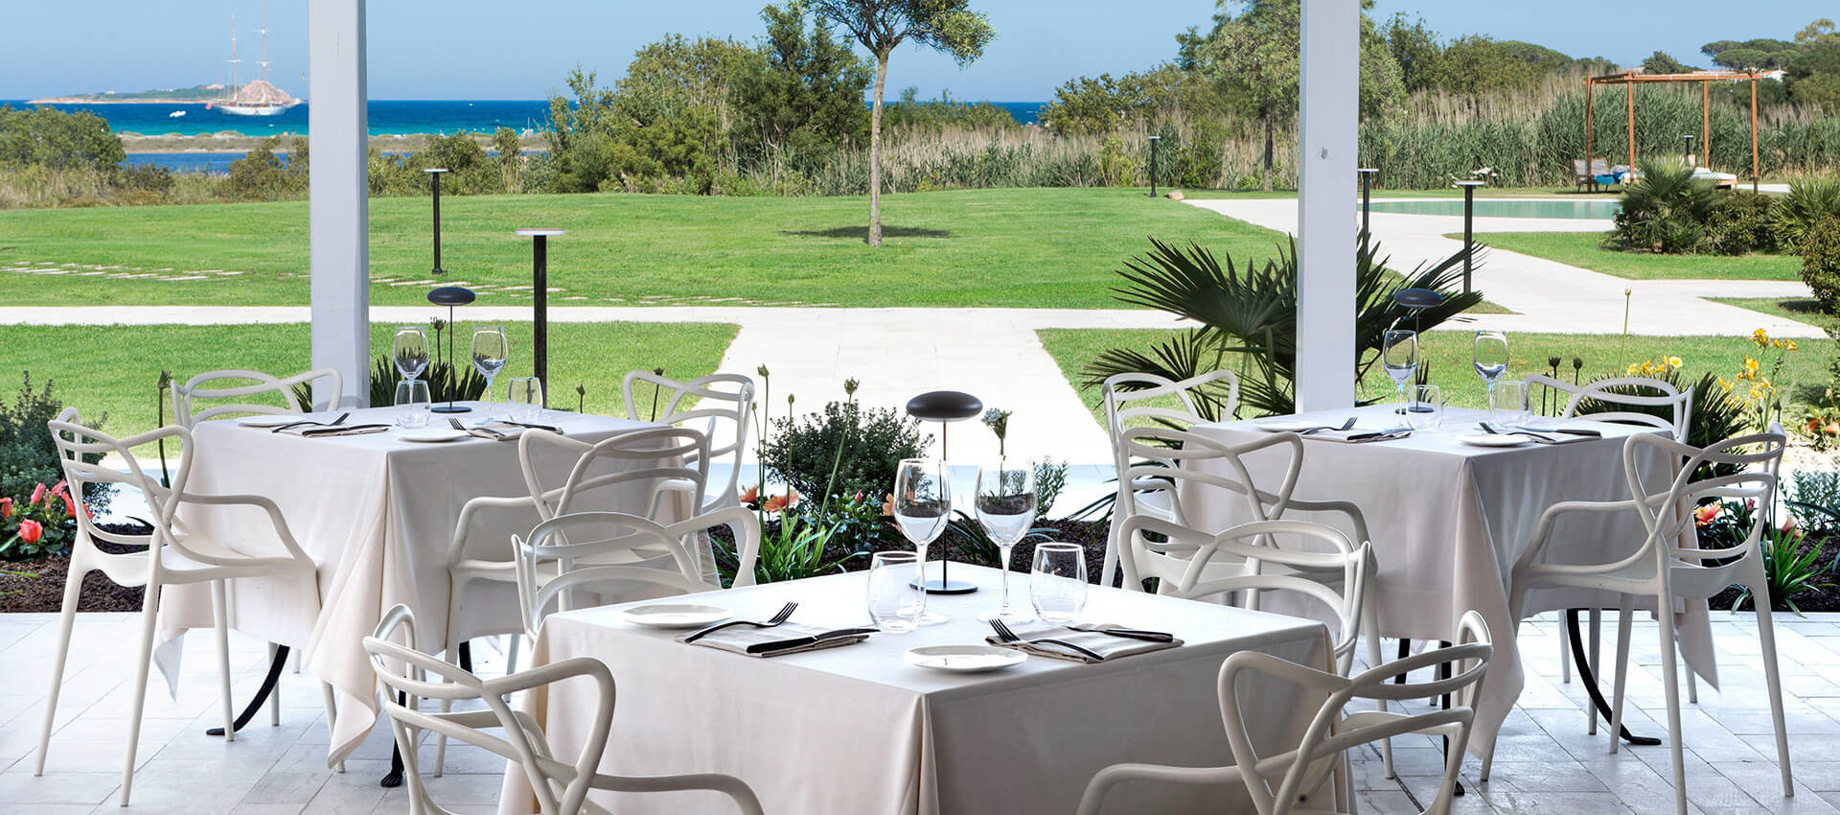 Baglioni Resort Sardinia – San Teodoro, Sardegna, Italy – Ruia Restaurant Ocean View Terrace